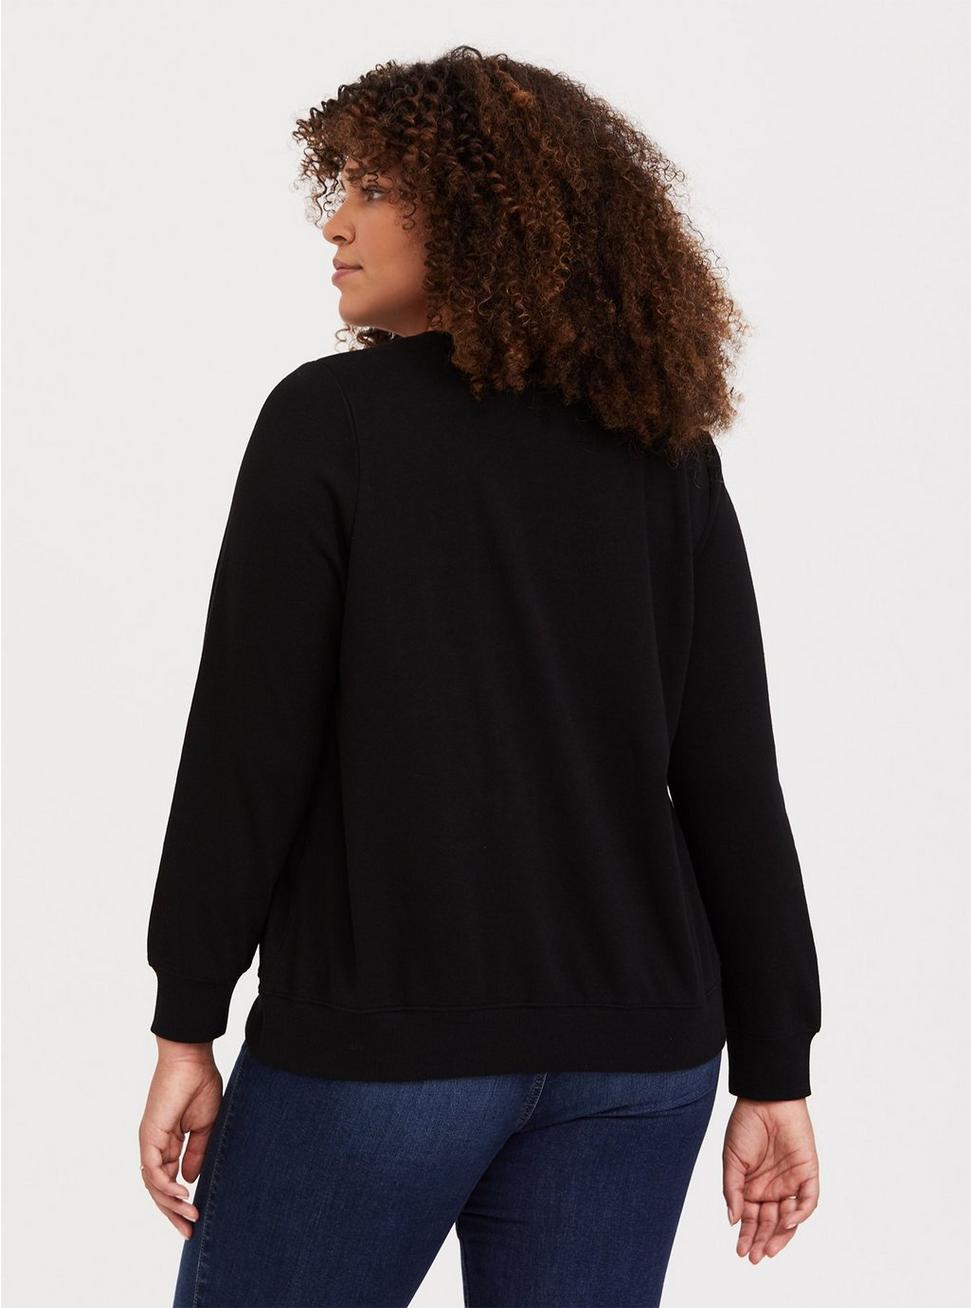 Plus Size - Bob Marley One Love Black Pullover Sweatshirt - Torrid